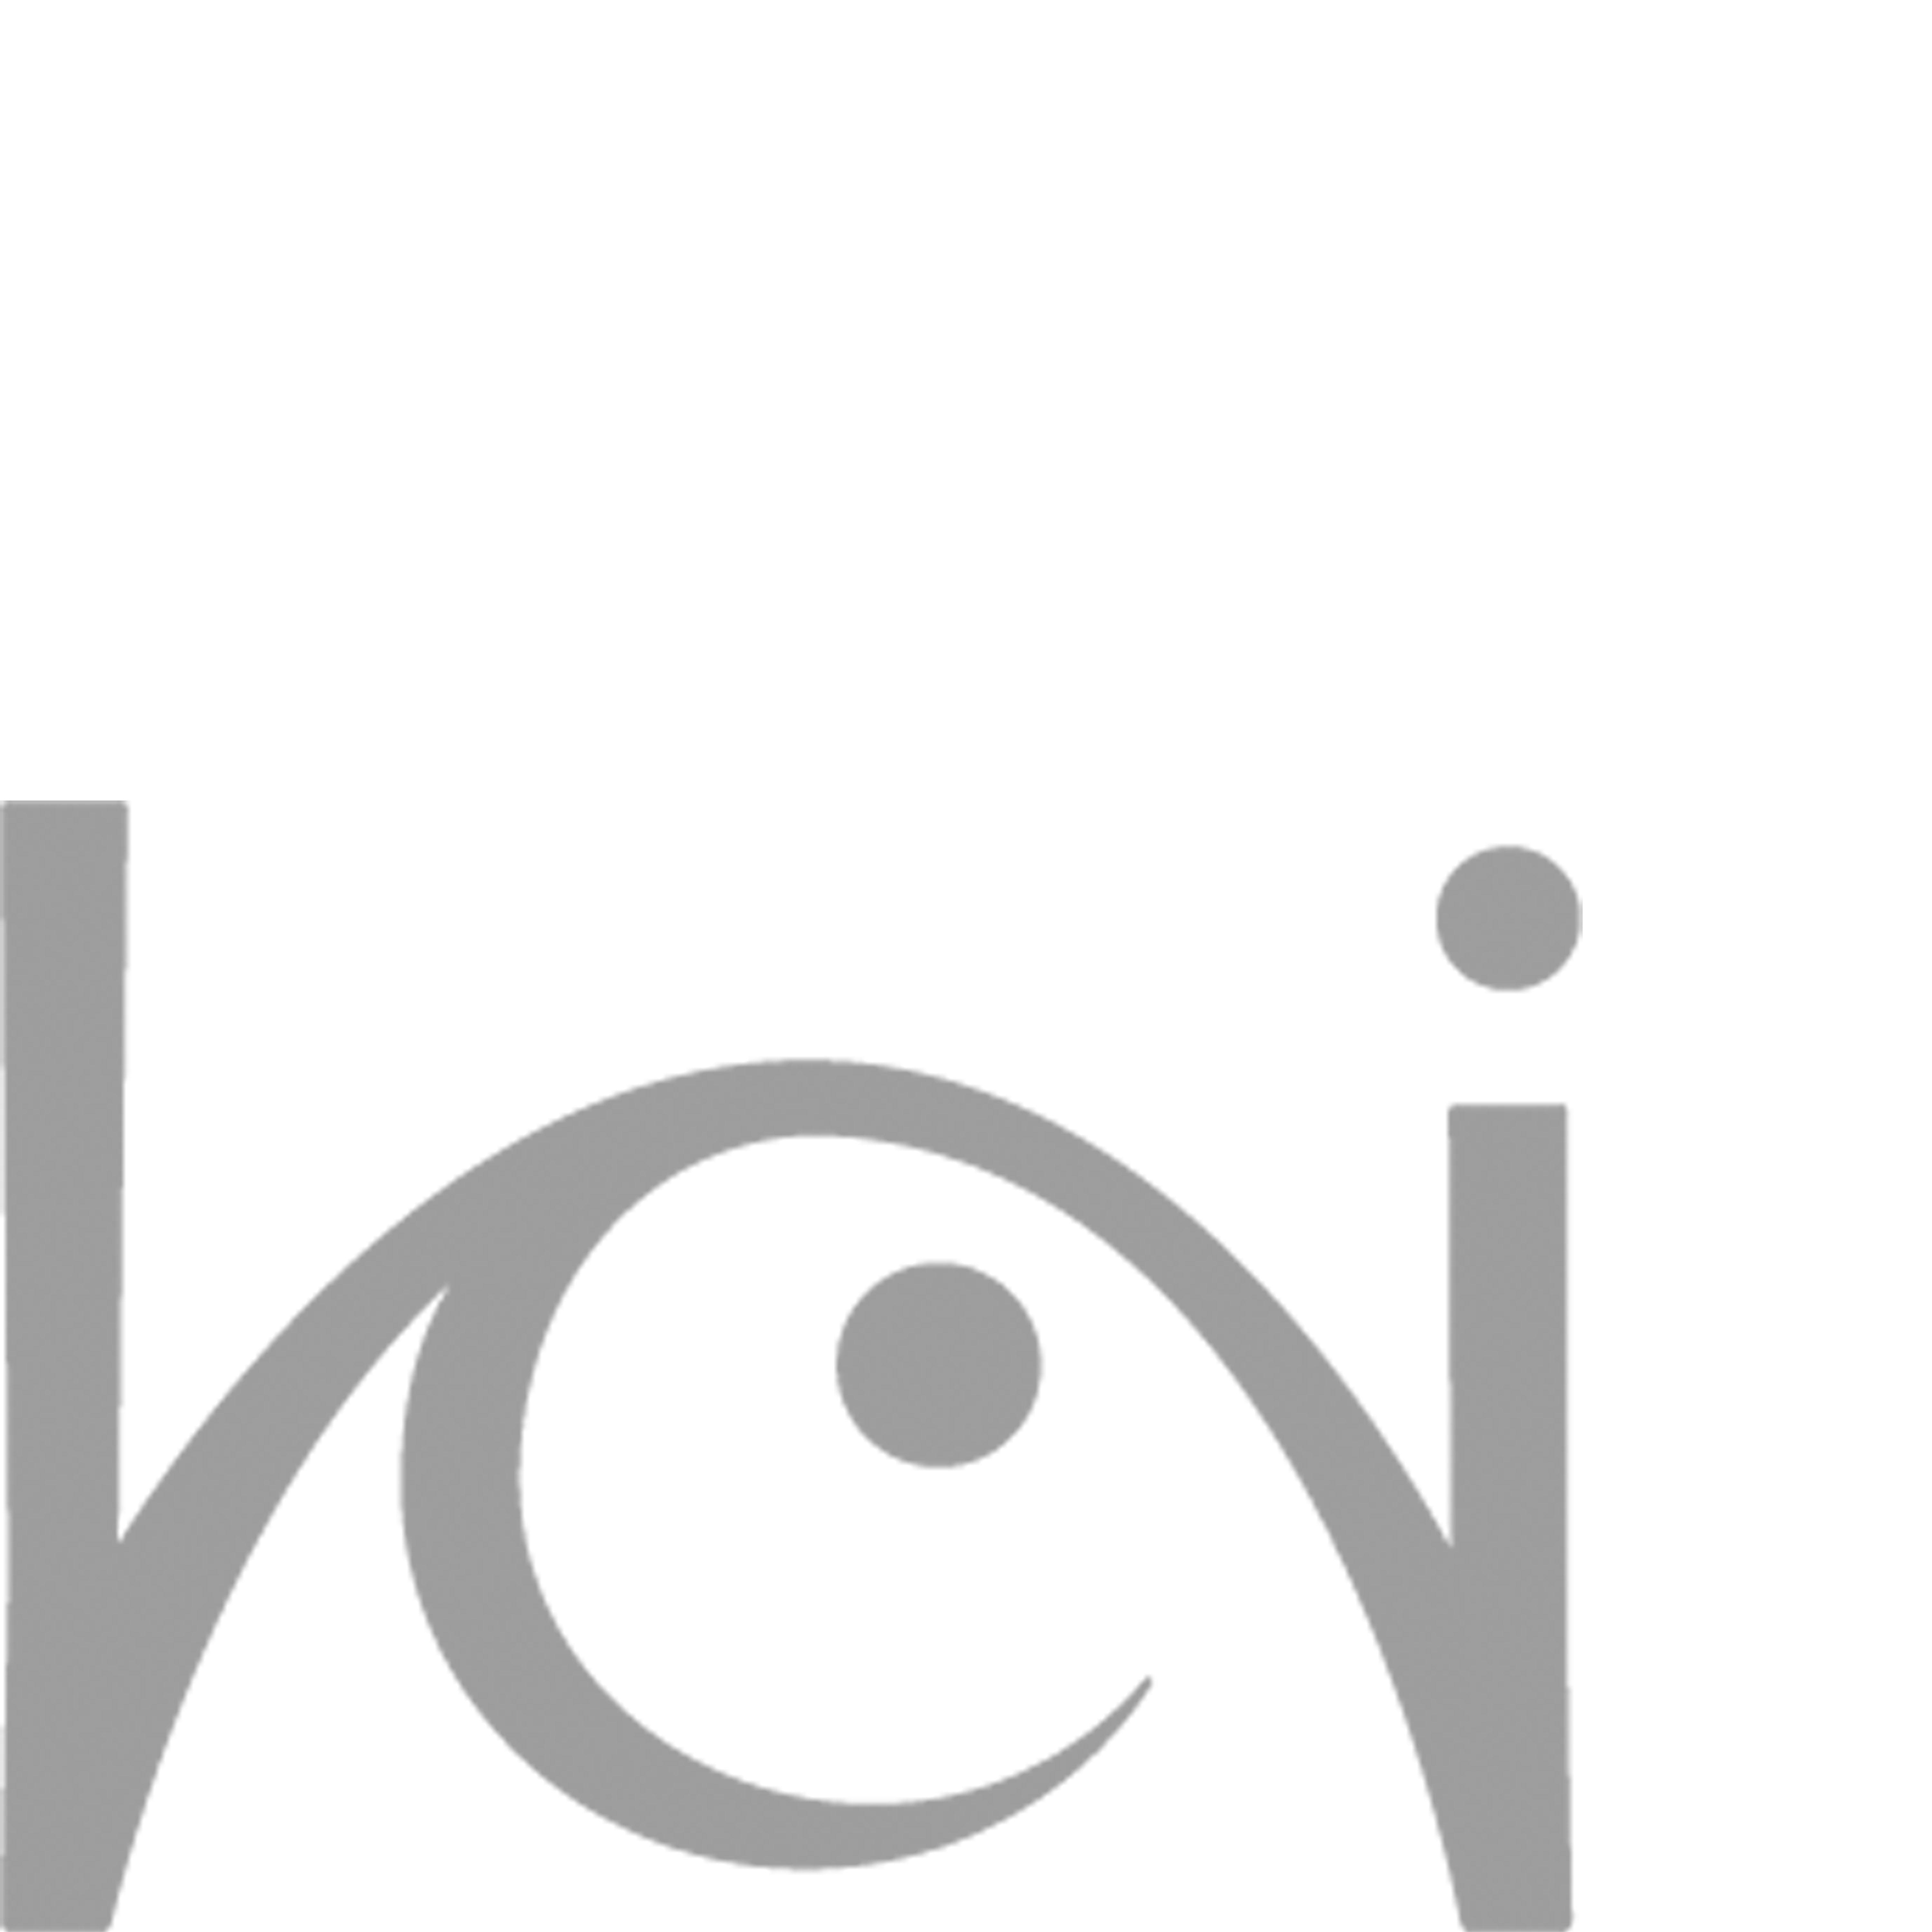 HCI Logo - hci-watermark-logo